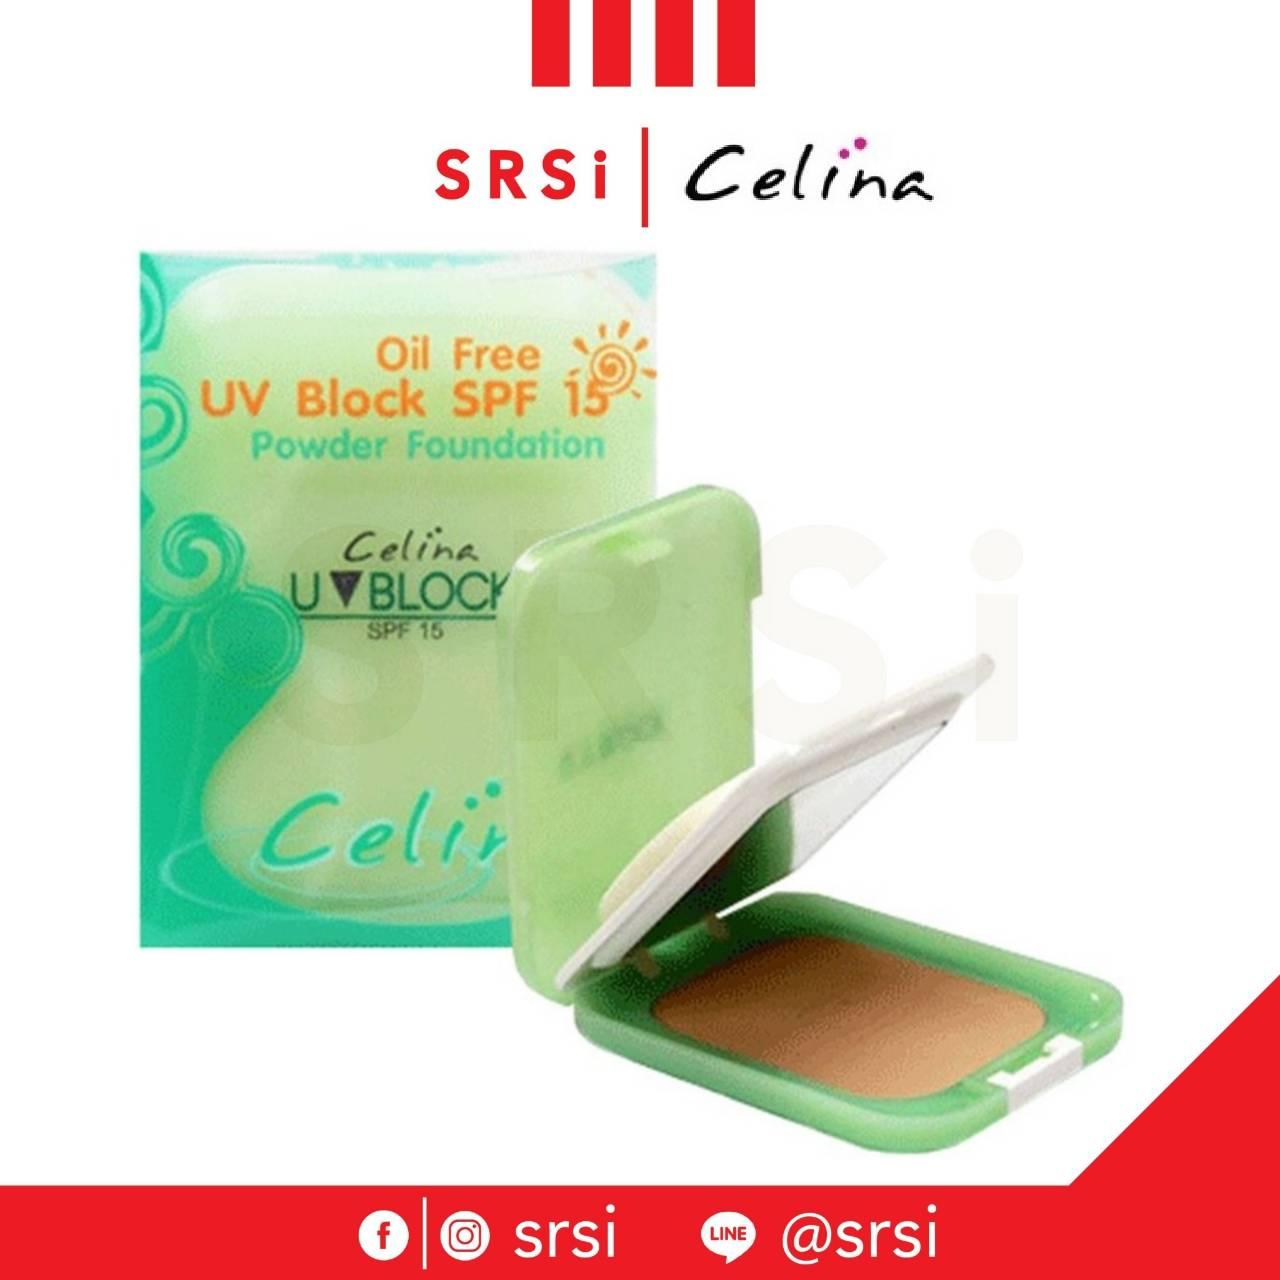 Celina [ตลับจริง] UV Block Oil Free Powder Foundation : เซลิน่า แป้งพริตตี้ แป้งพัฟ x 1ชิ้น @SRSi